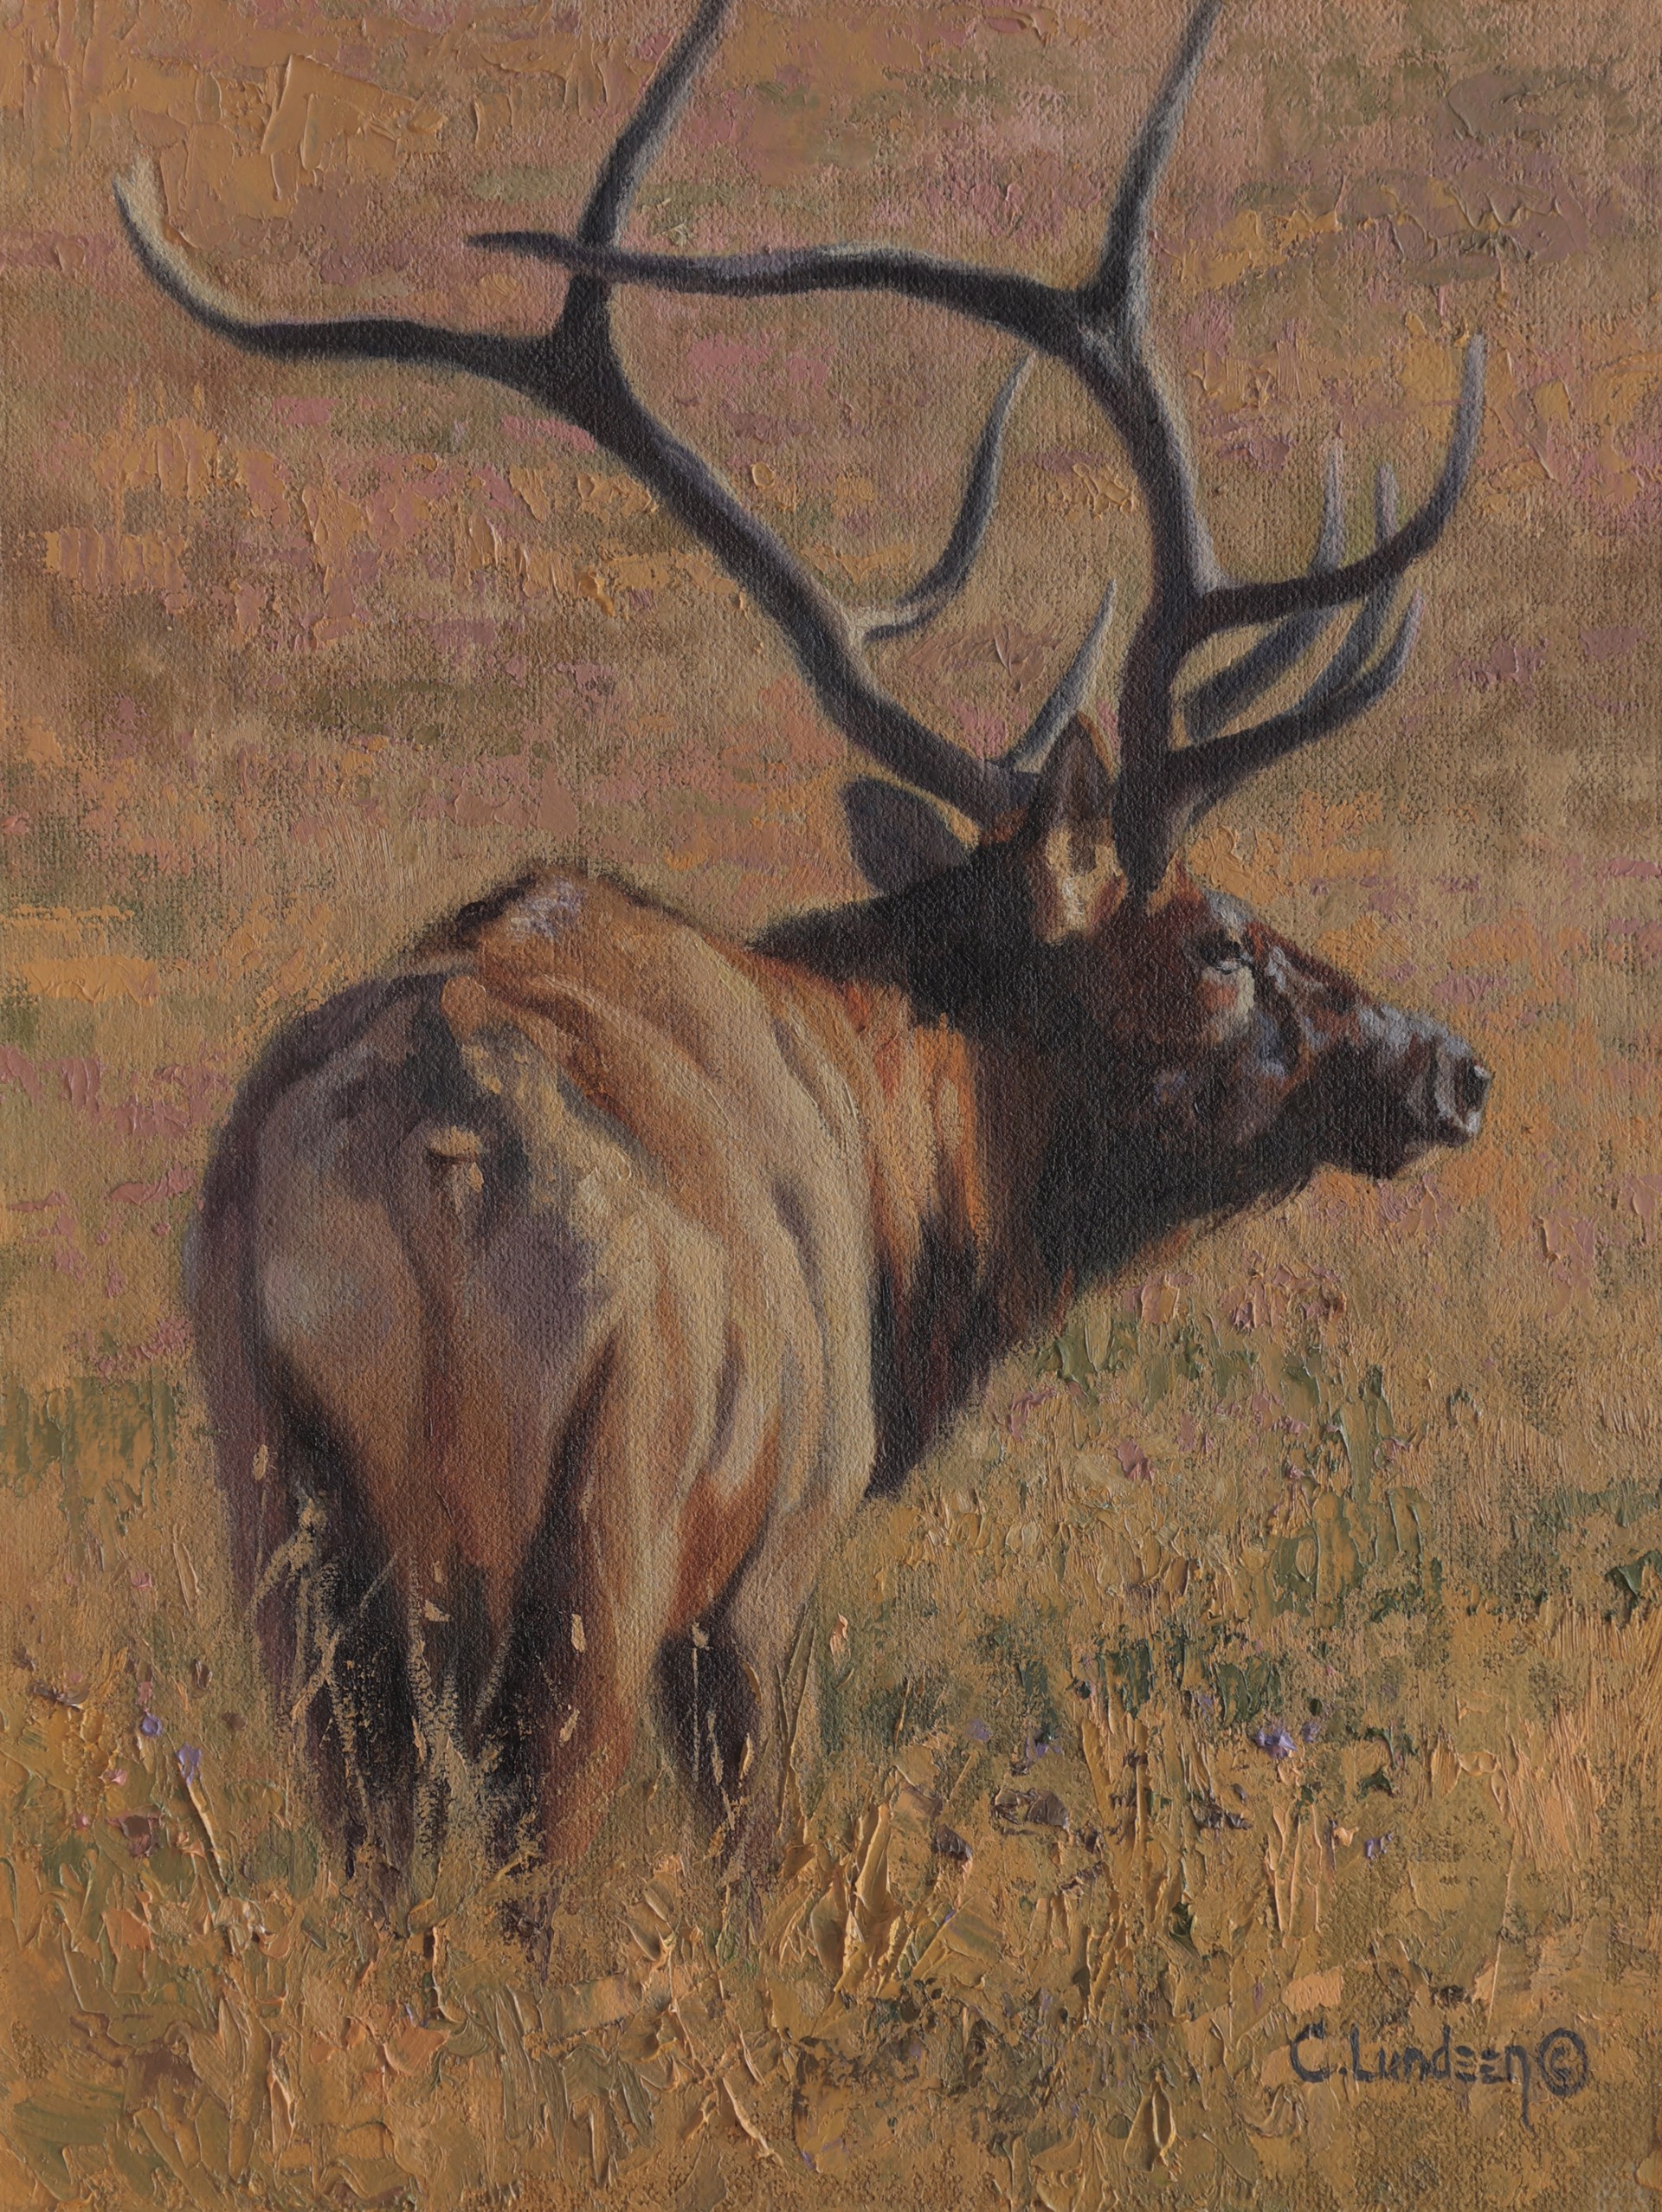 Season of Splendor - Bull Elk by Carol Lundeen